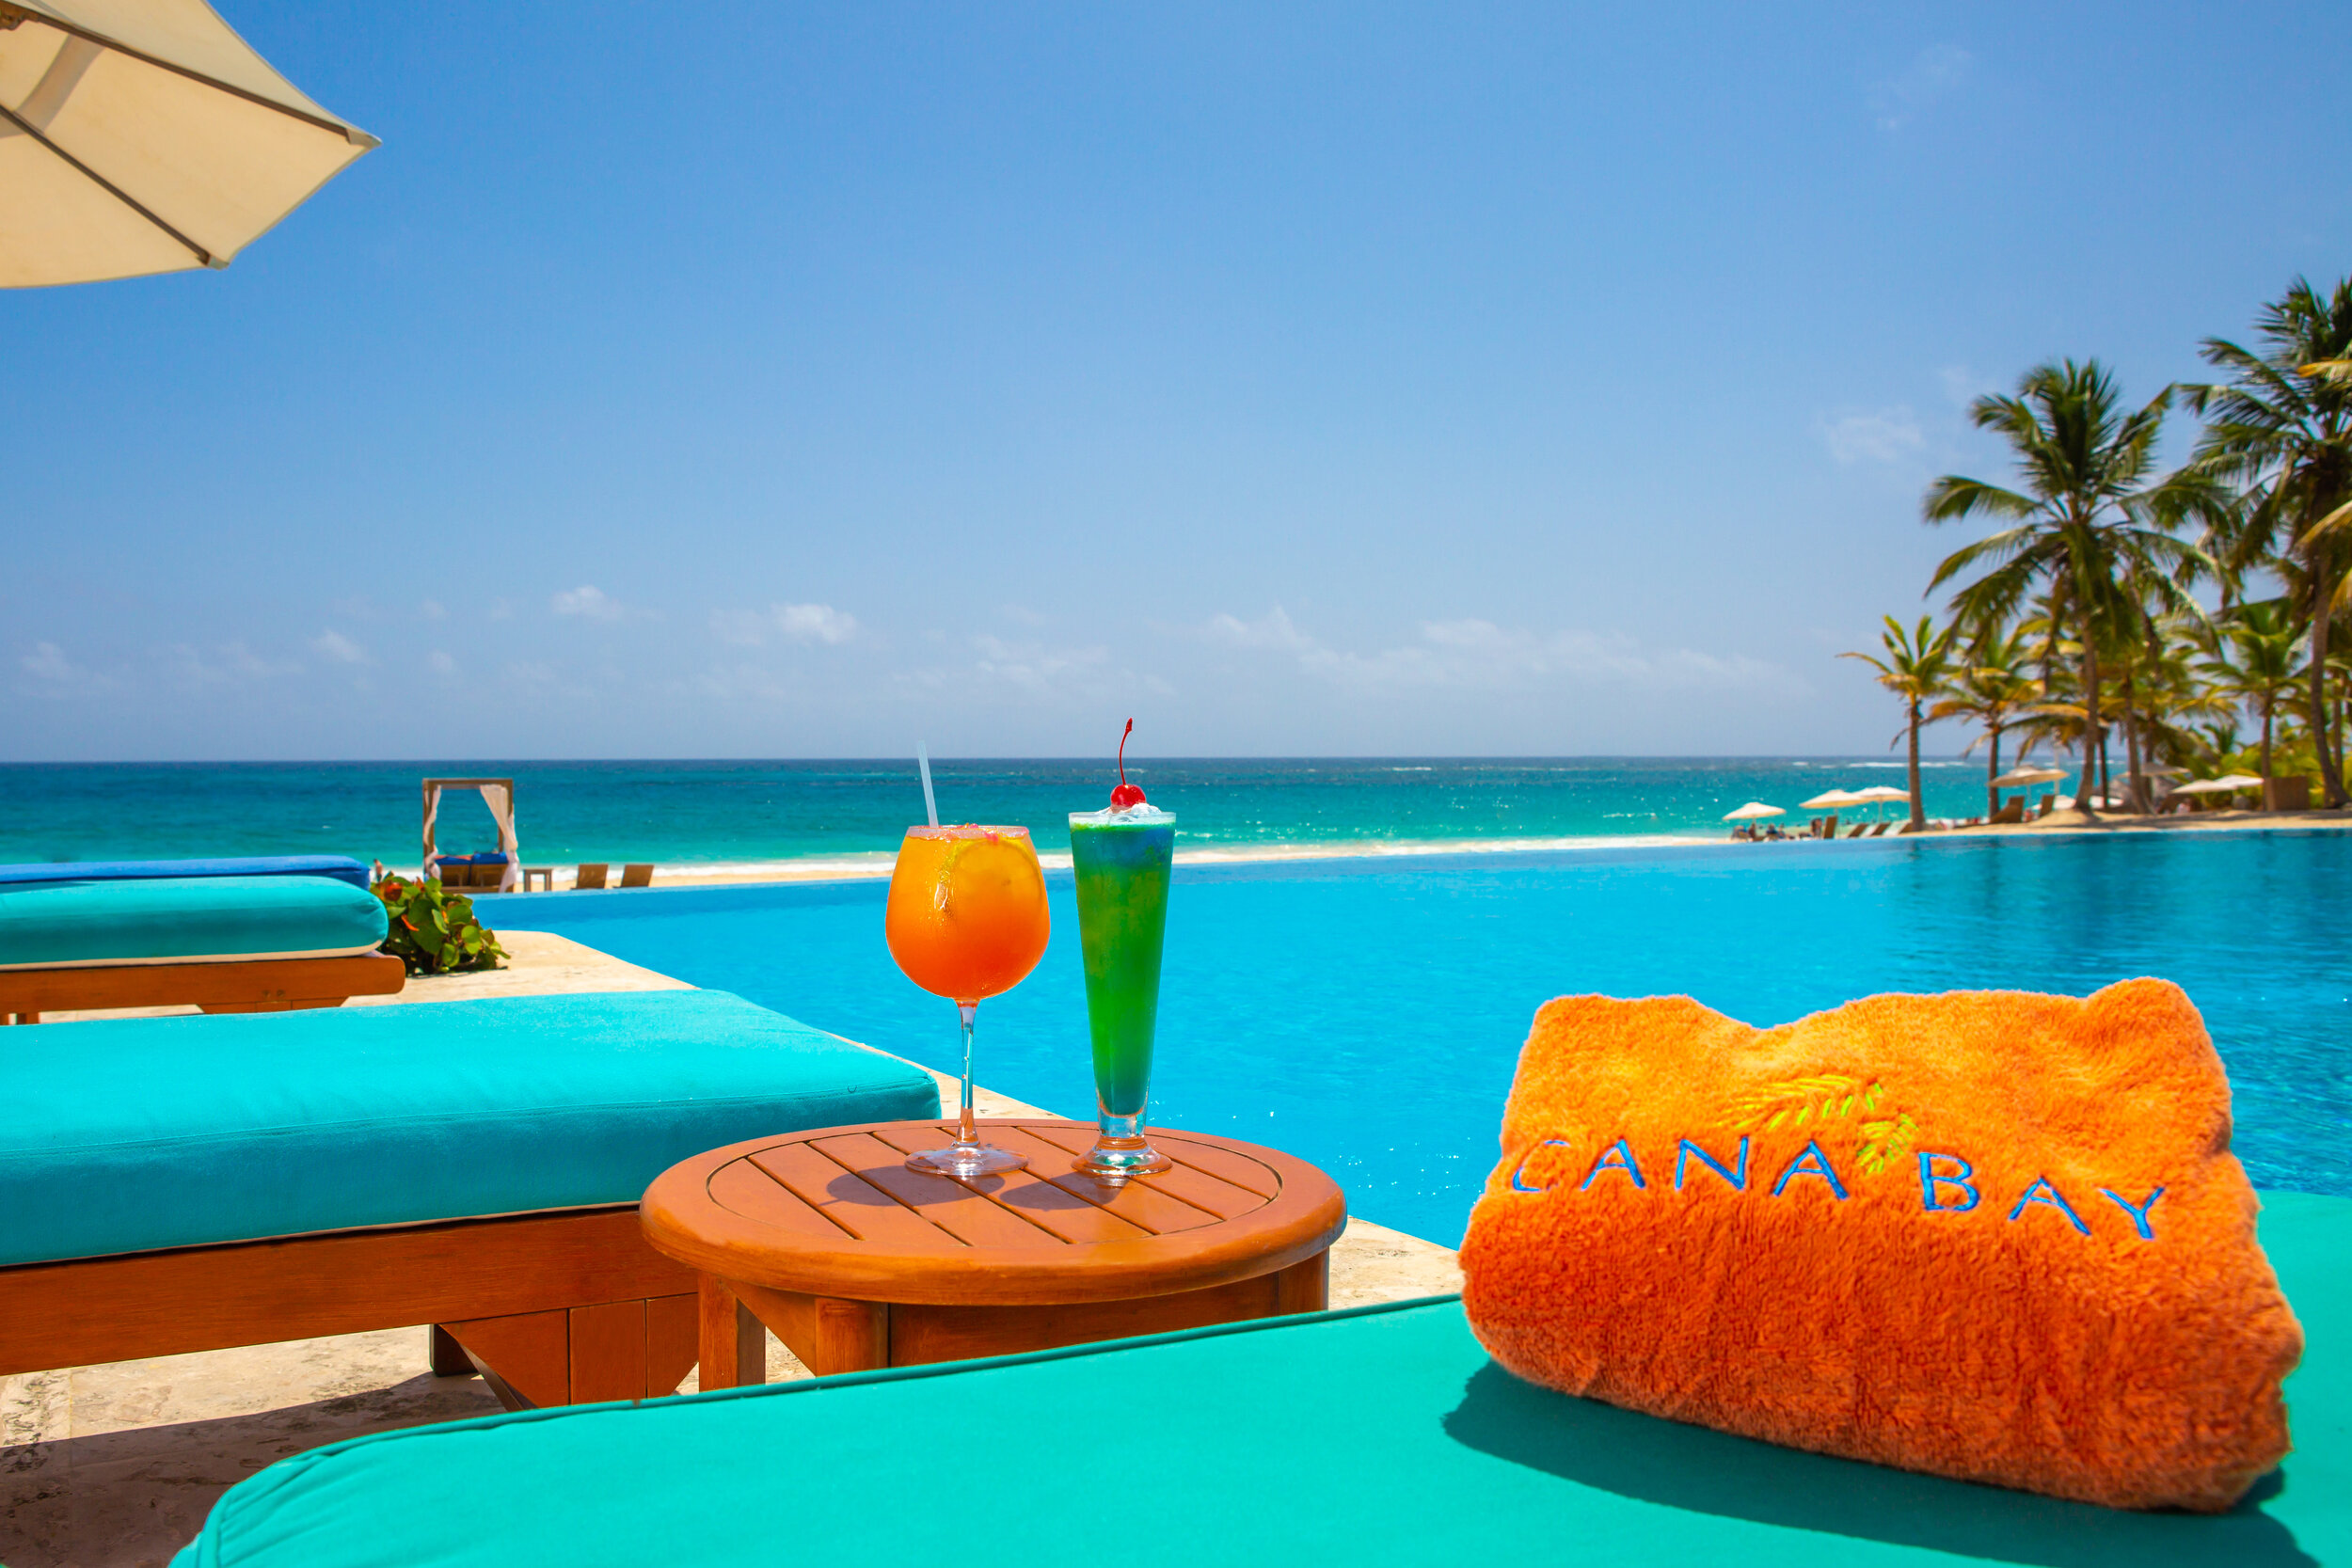 About — Cana Bay Beach Club & Golf Resort